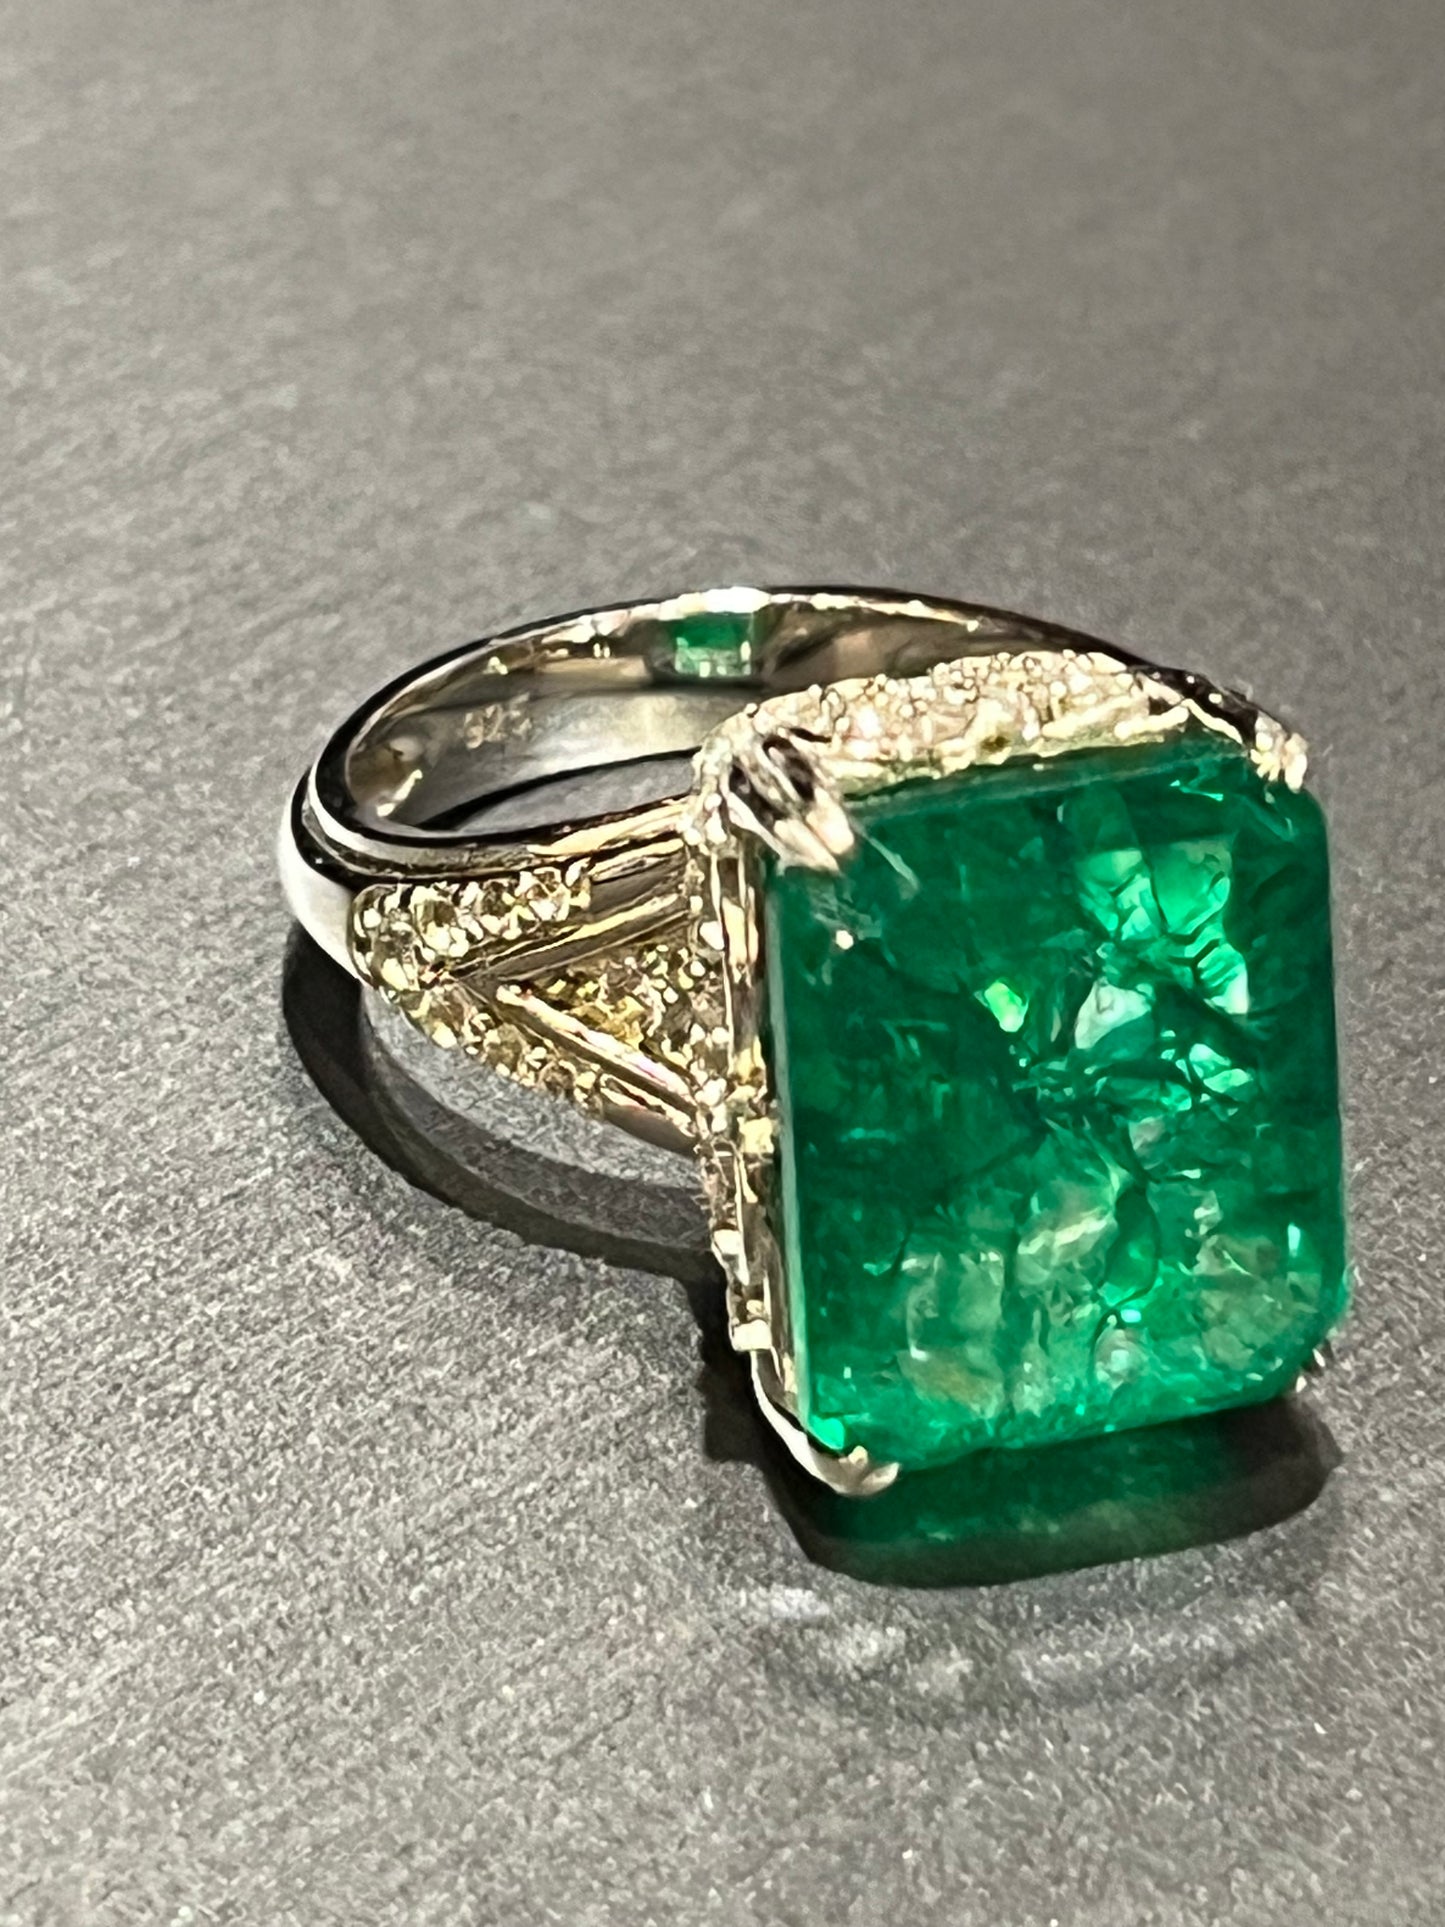 10.52ct Emerald w/ White Topaz in Sterling (size 6.5)